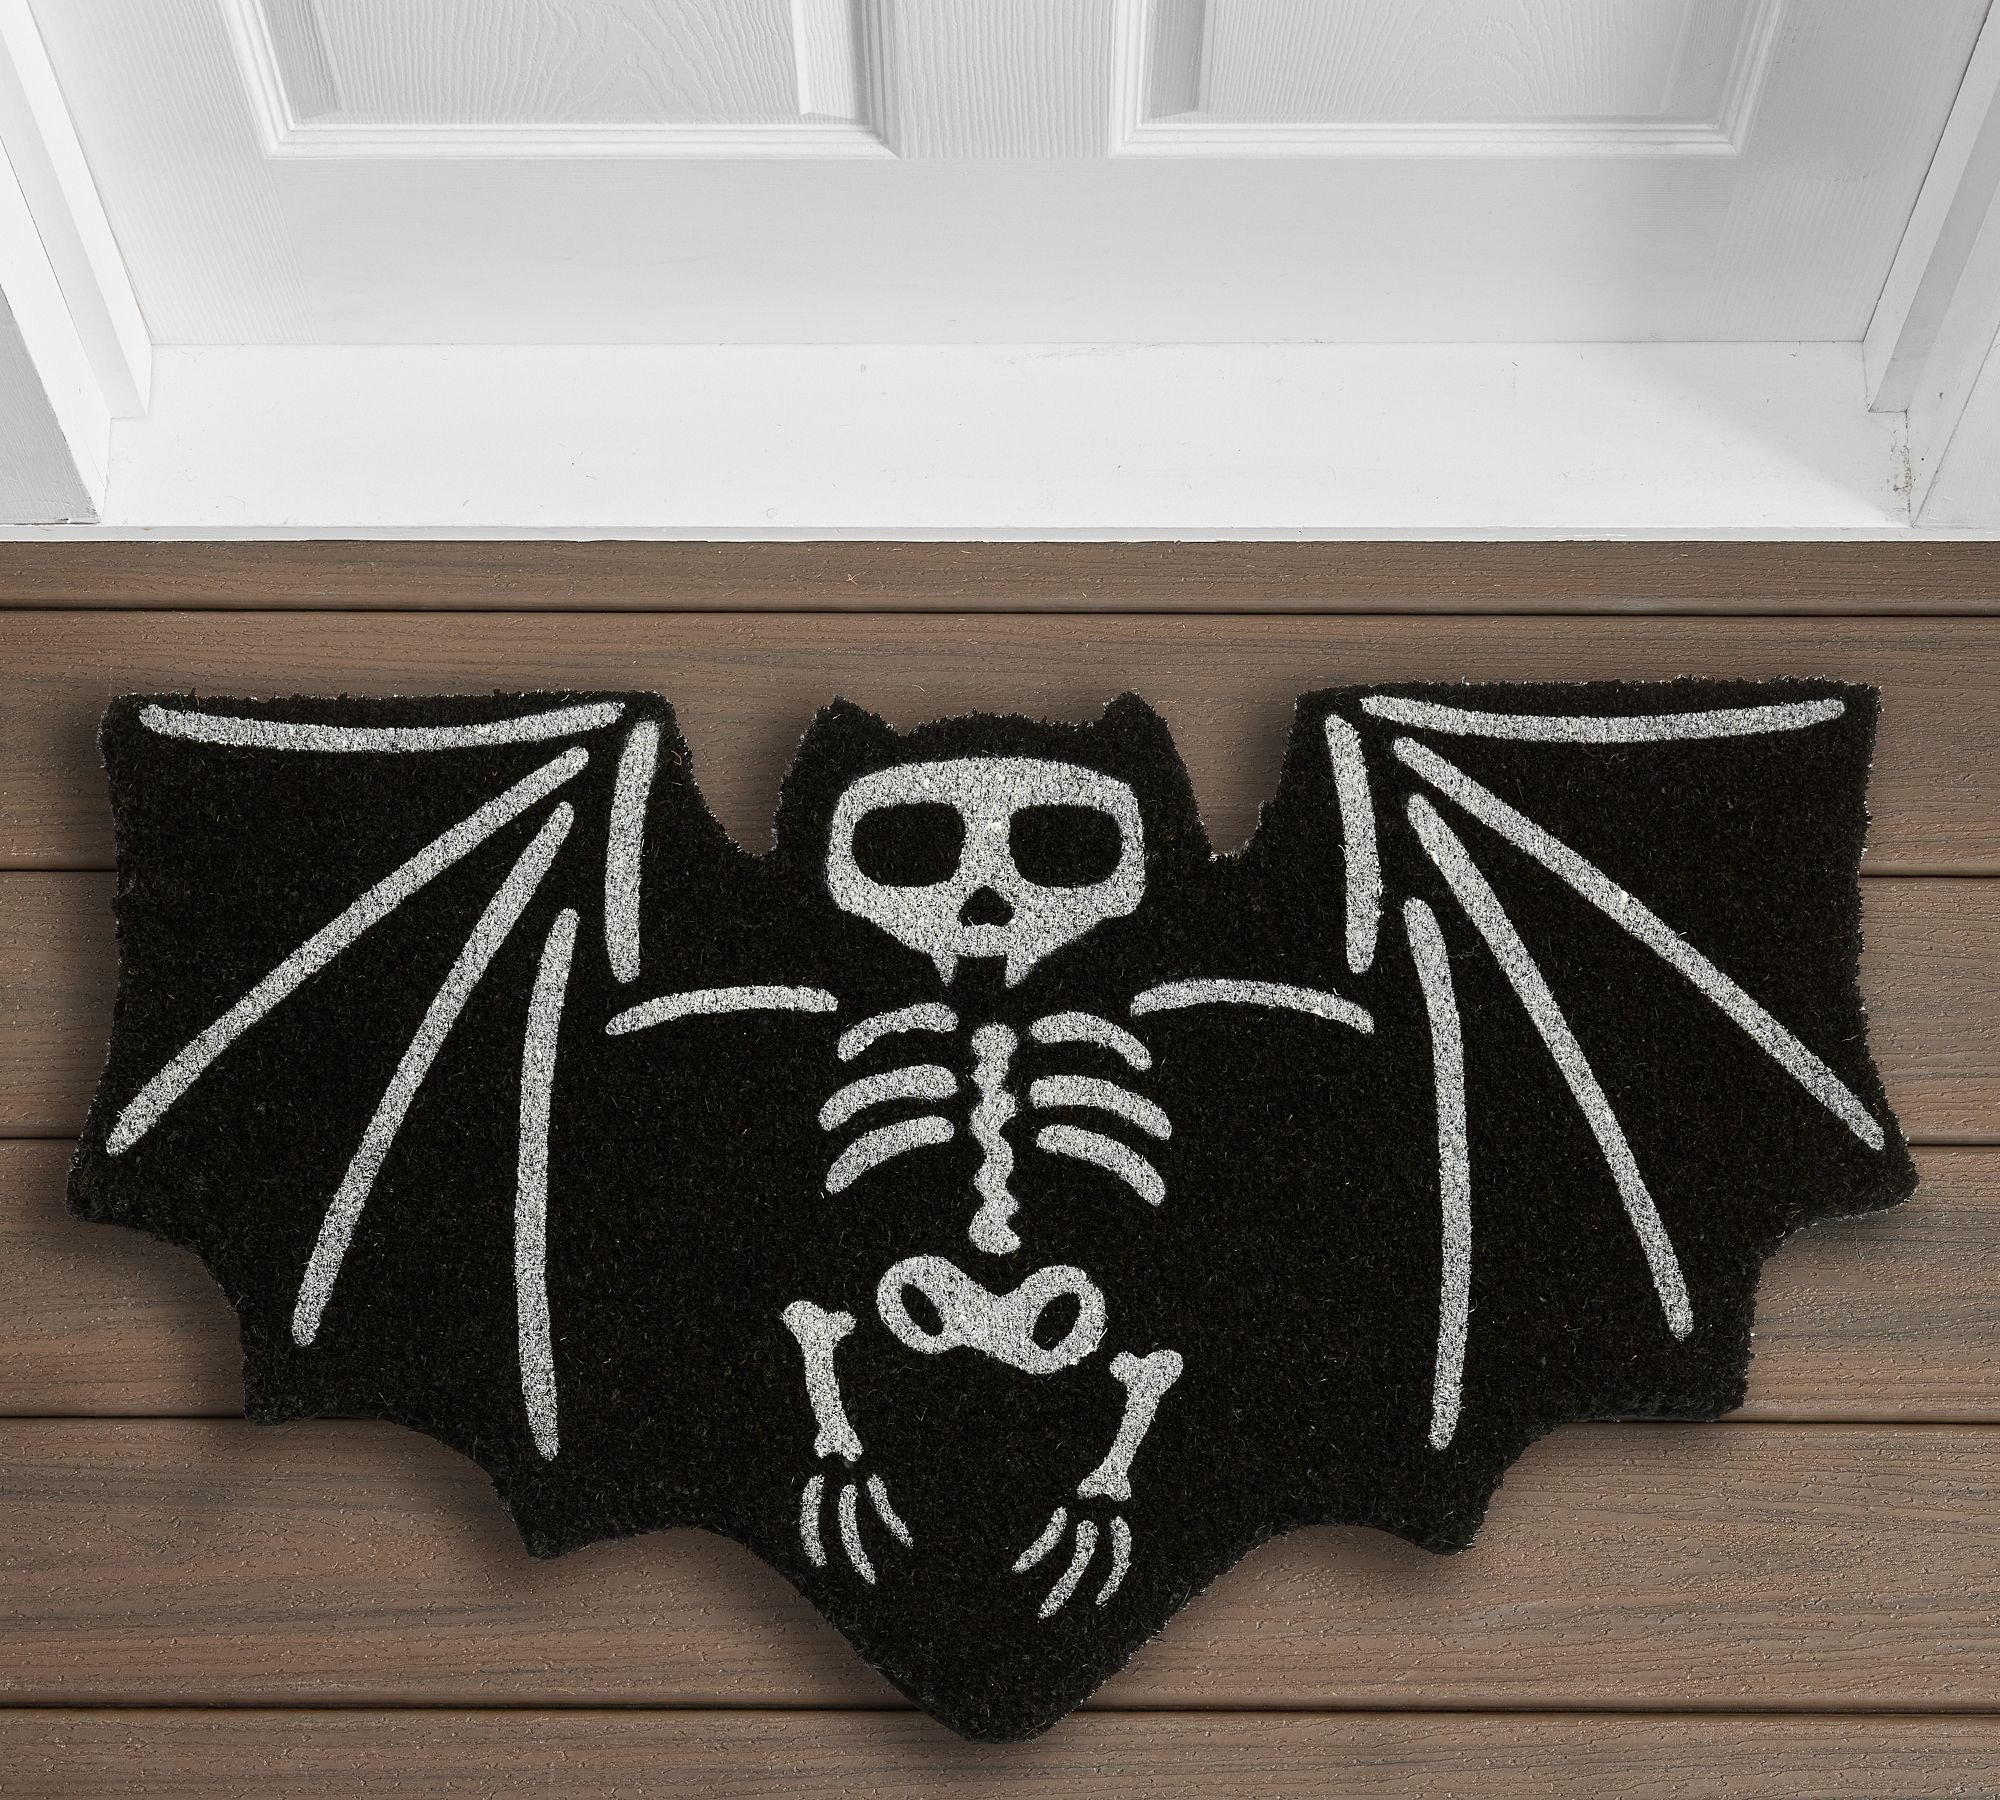 Skeleton Bat Shaped Doormat